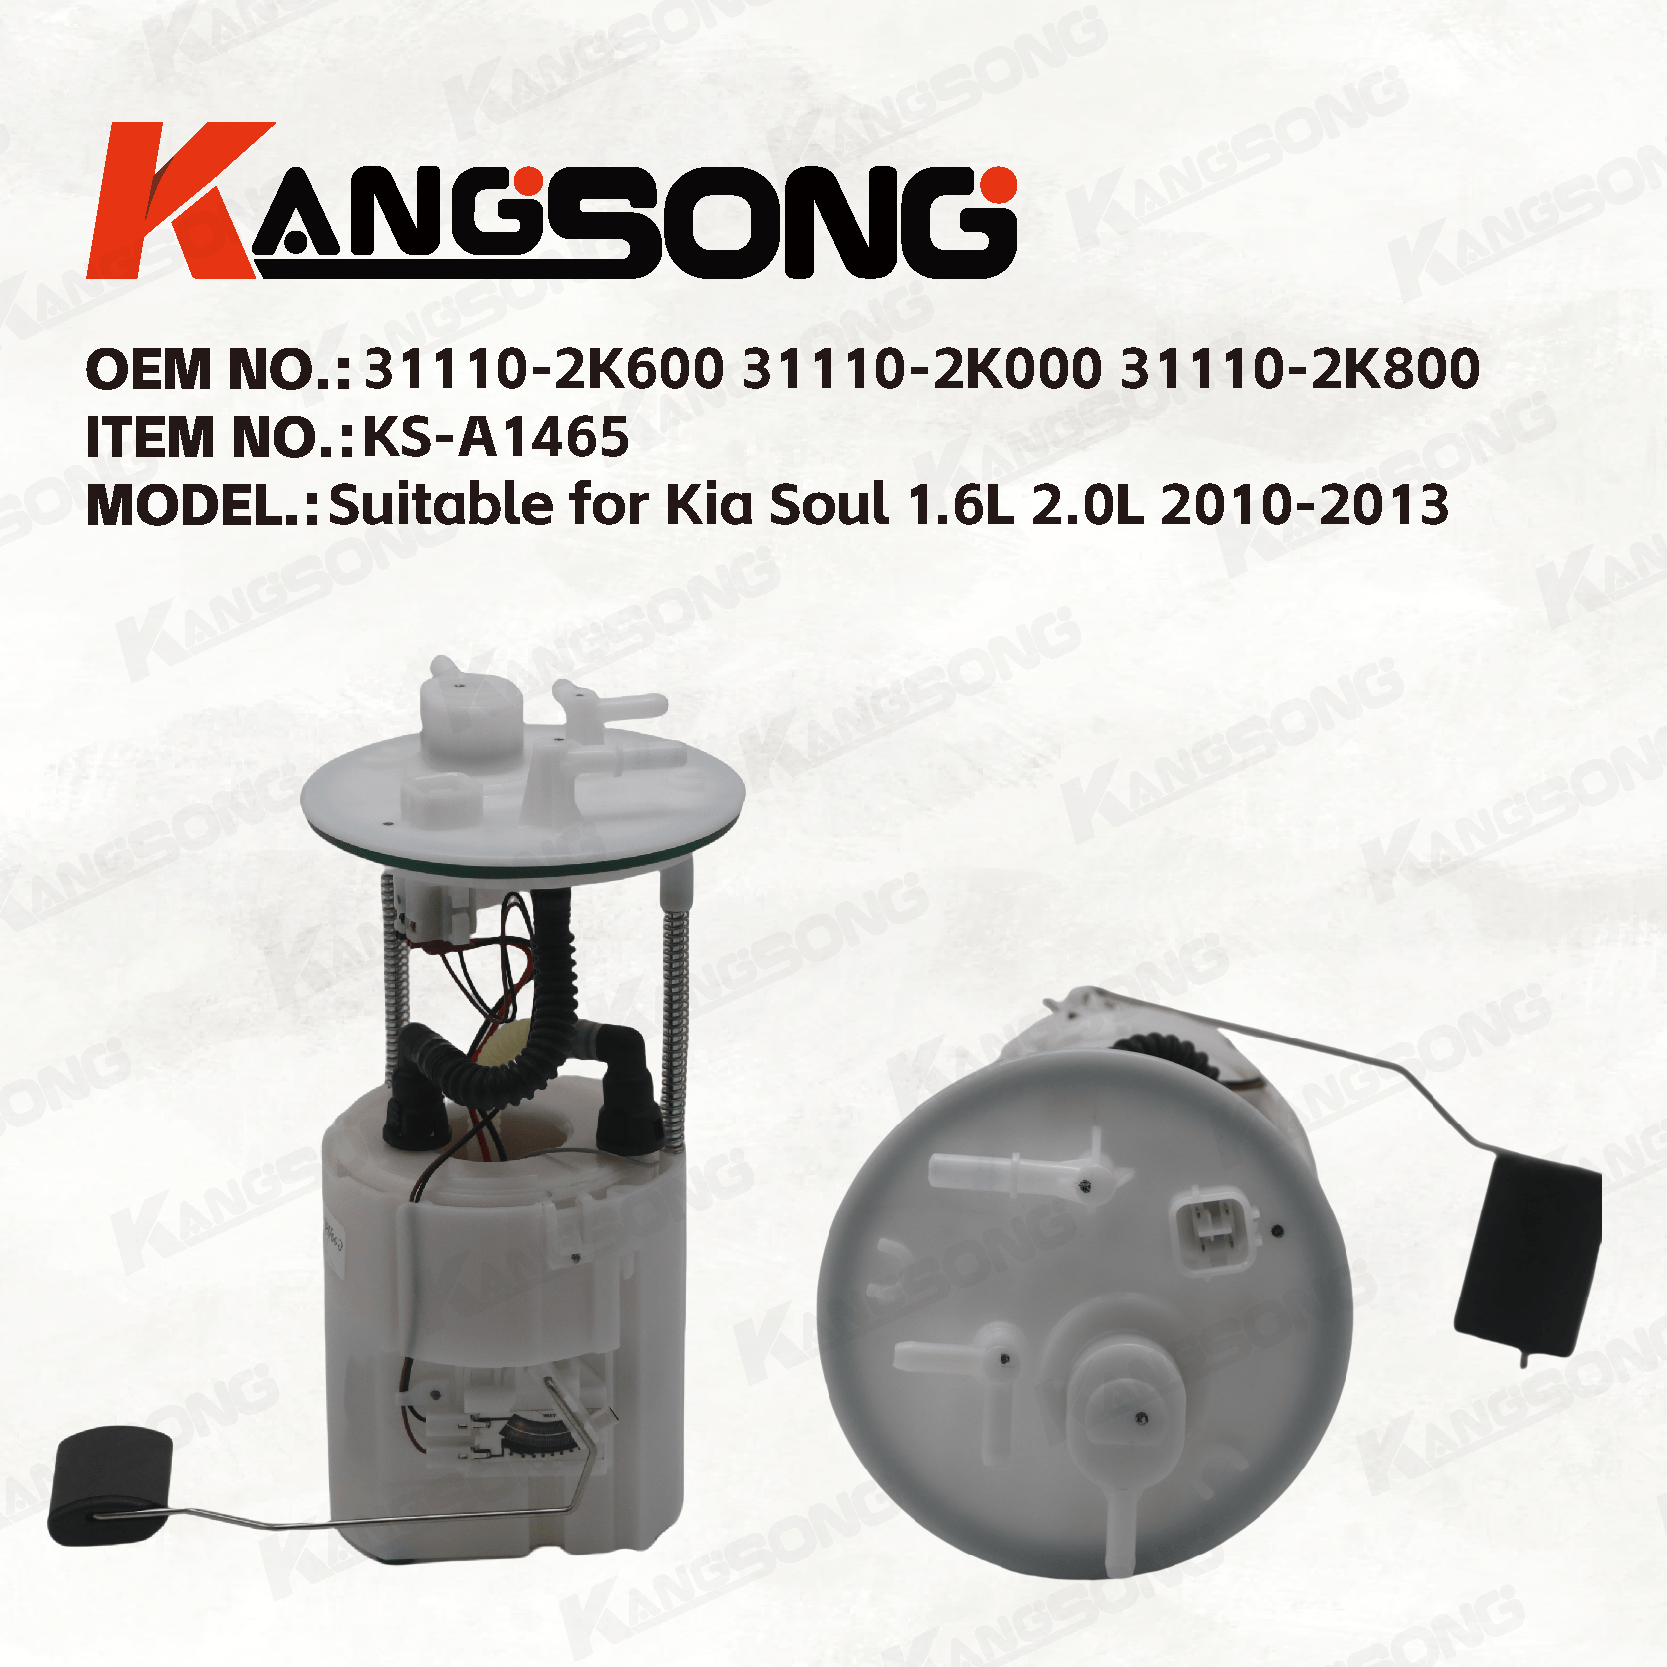 Applicable to Kia Soul 1.6L 2.0L 2010-2013/ 31110-2K600 31110-2K000 31110-2K800/Fuel Pump Assembly/KS-A1467